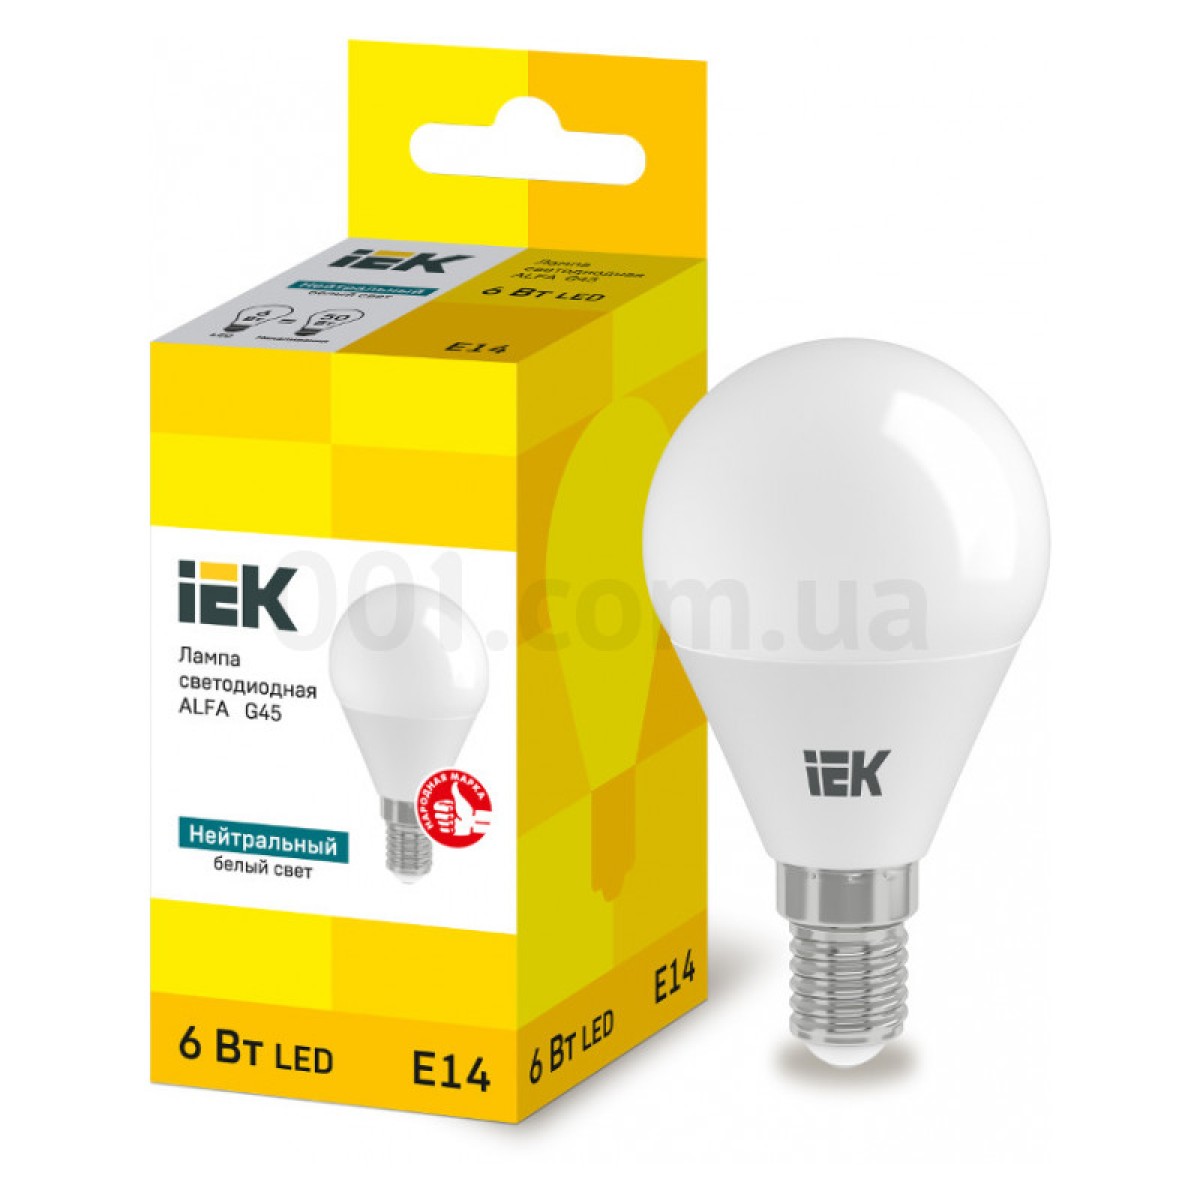 Светодиодная лампа LED ALFA G45 (шар) 6 Вт 230В 4000К E14, IEK 256_256.jpg